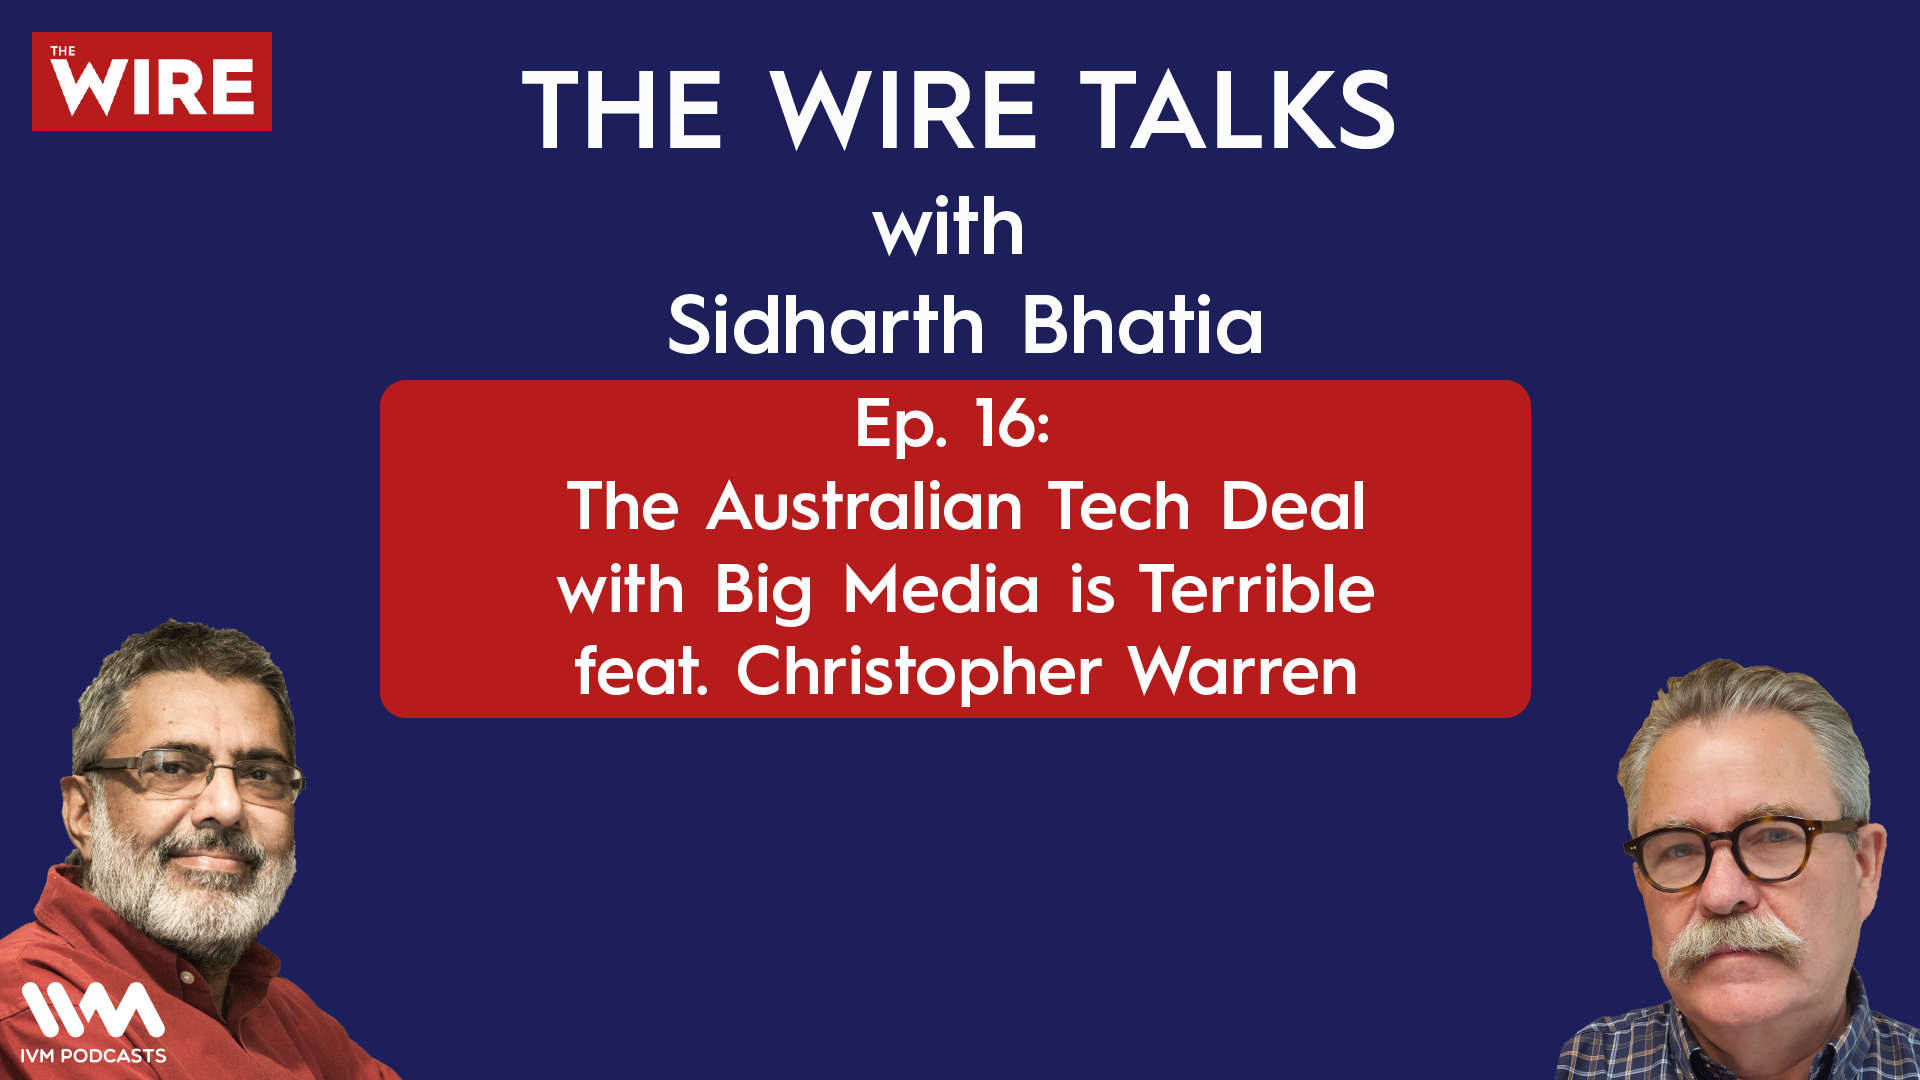 The Australian Tech Deal with Big Media is Terrible feat. Christopher Warren